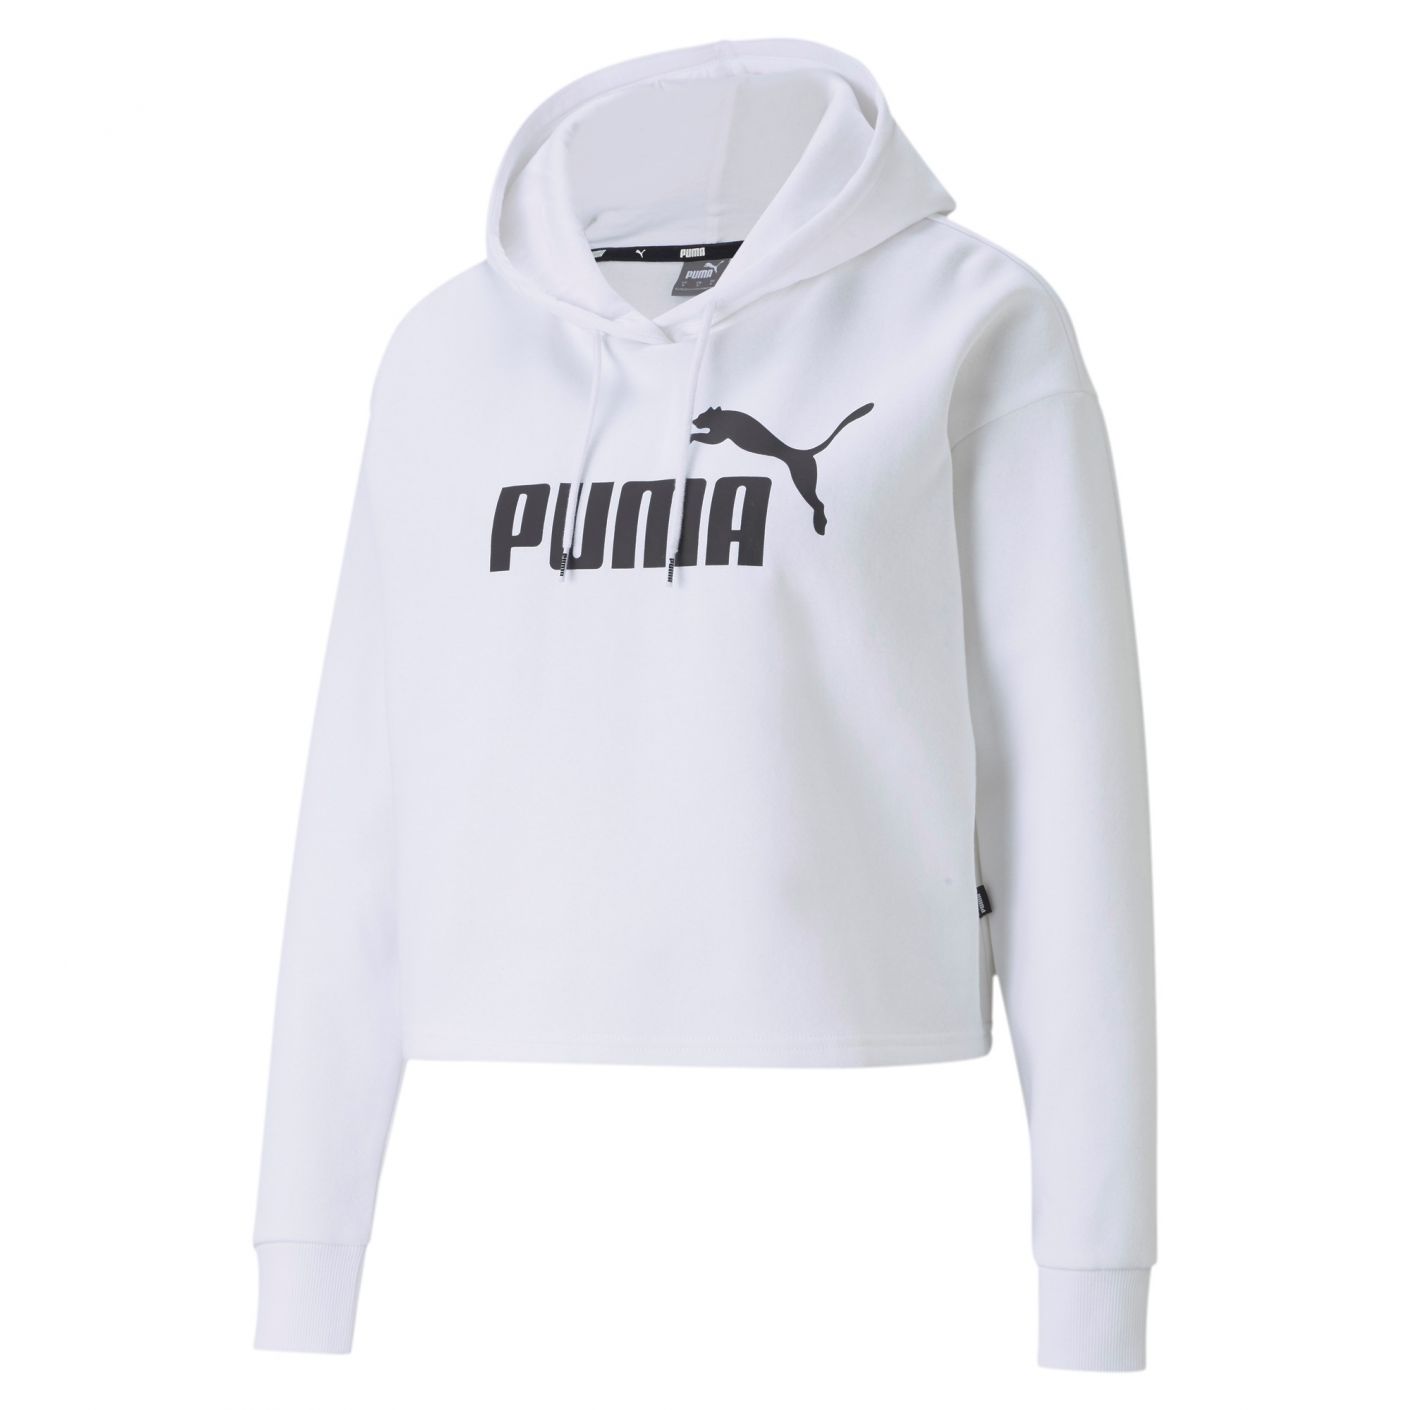 Puma - Ess cropped logo hoodie fl #02 586869